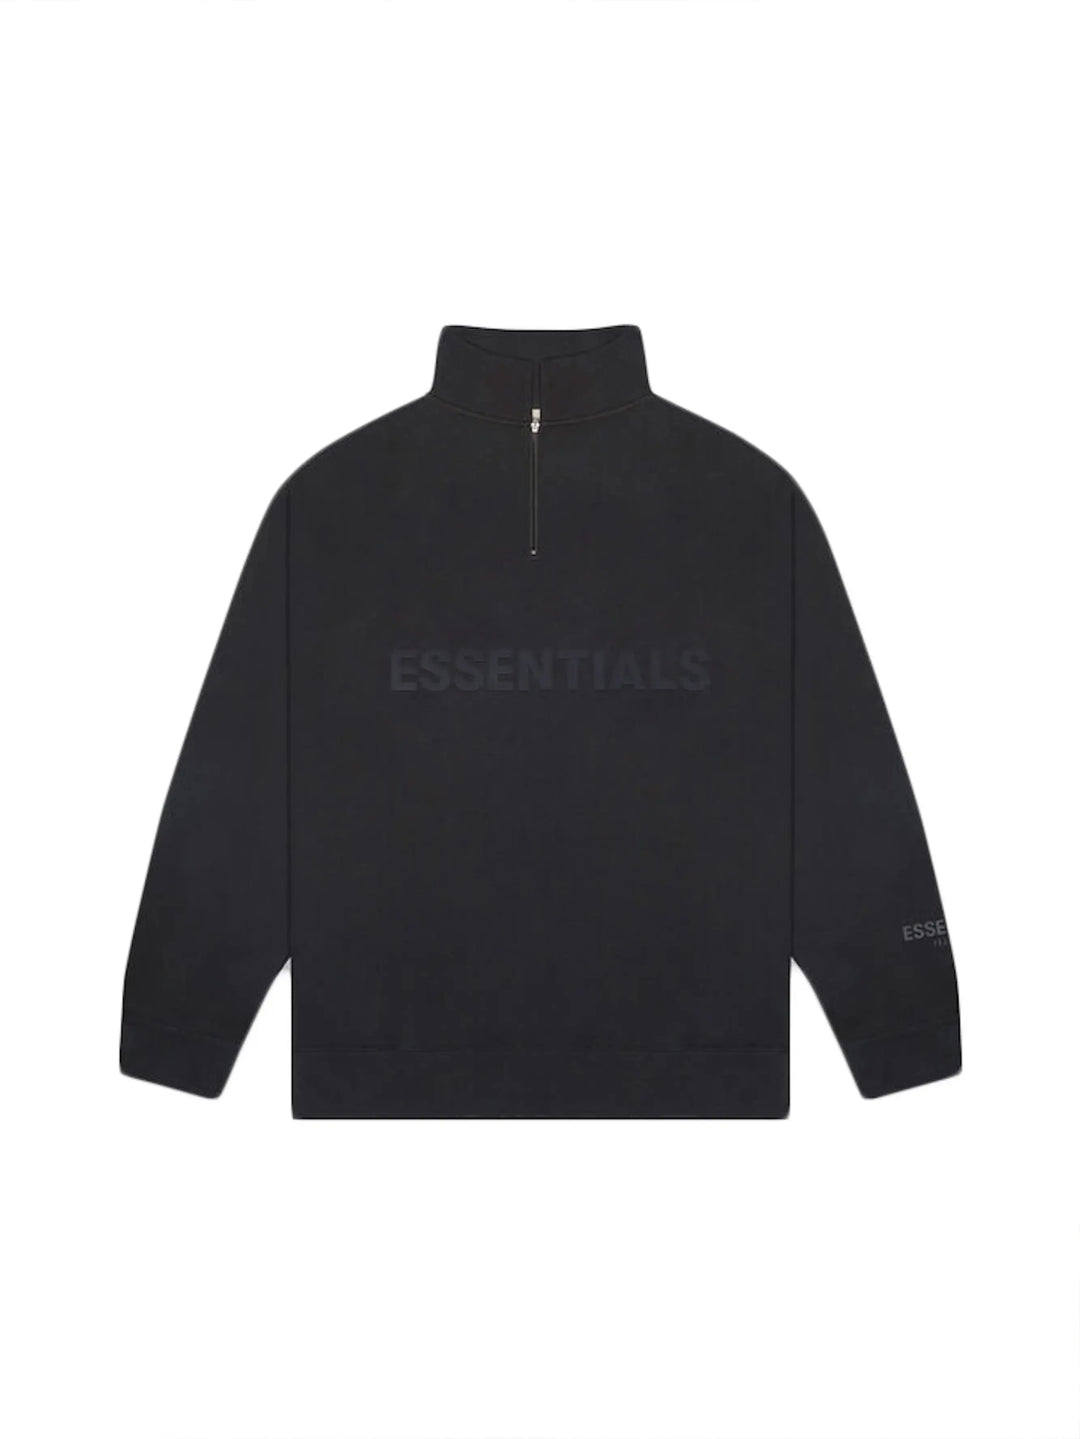 Fear of God Essentials Half Zip Pullover Sweater Dark Slate/Stretch Limo/Black in Melbourne, Australia - Prior